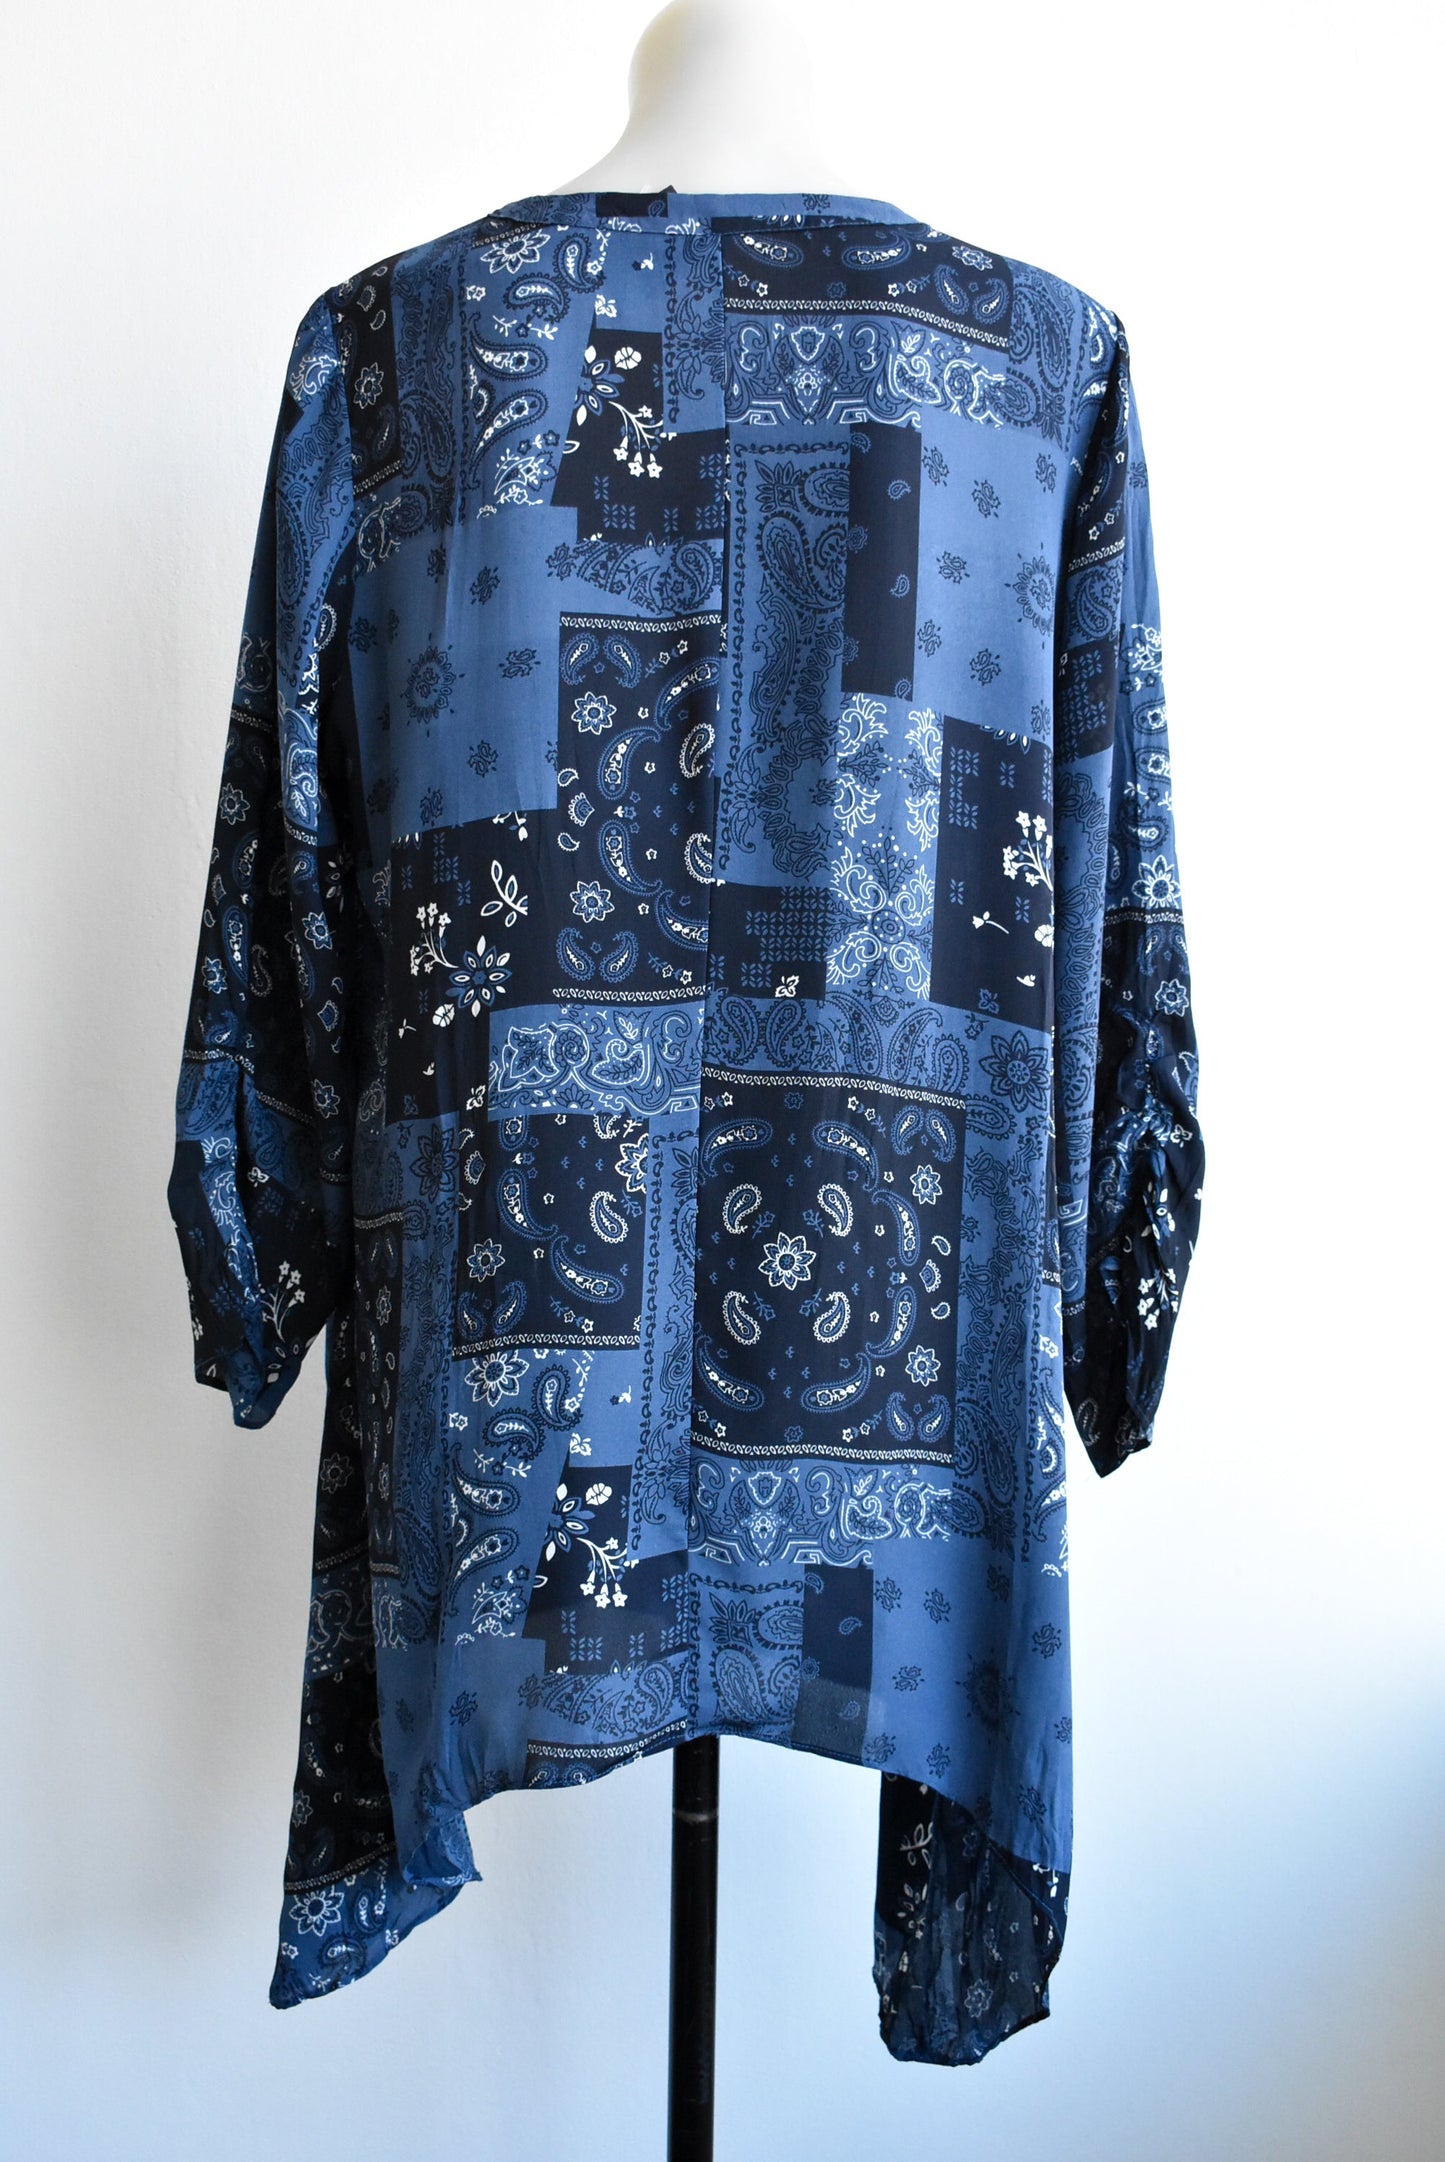 Capture blue paisley/scrollwork shirt dress, size 12